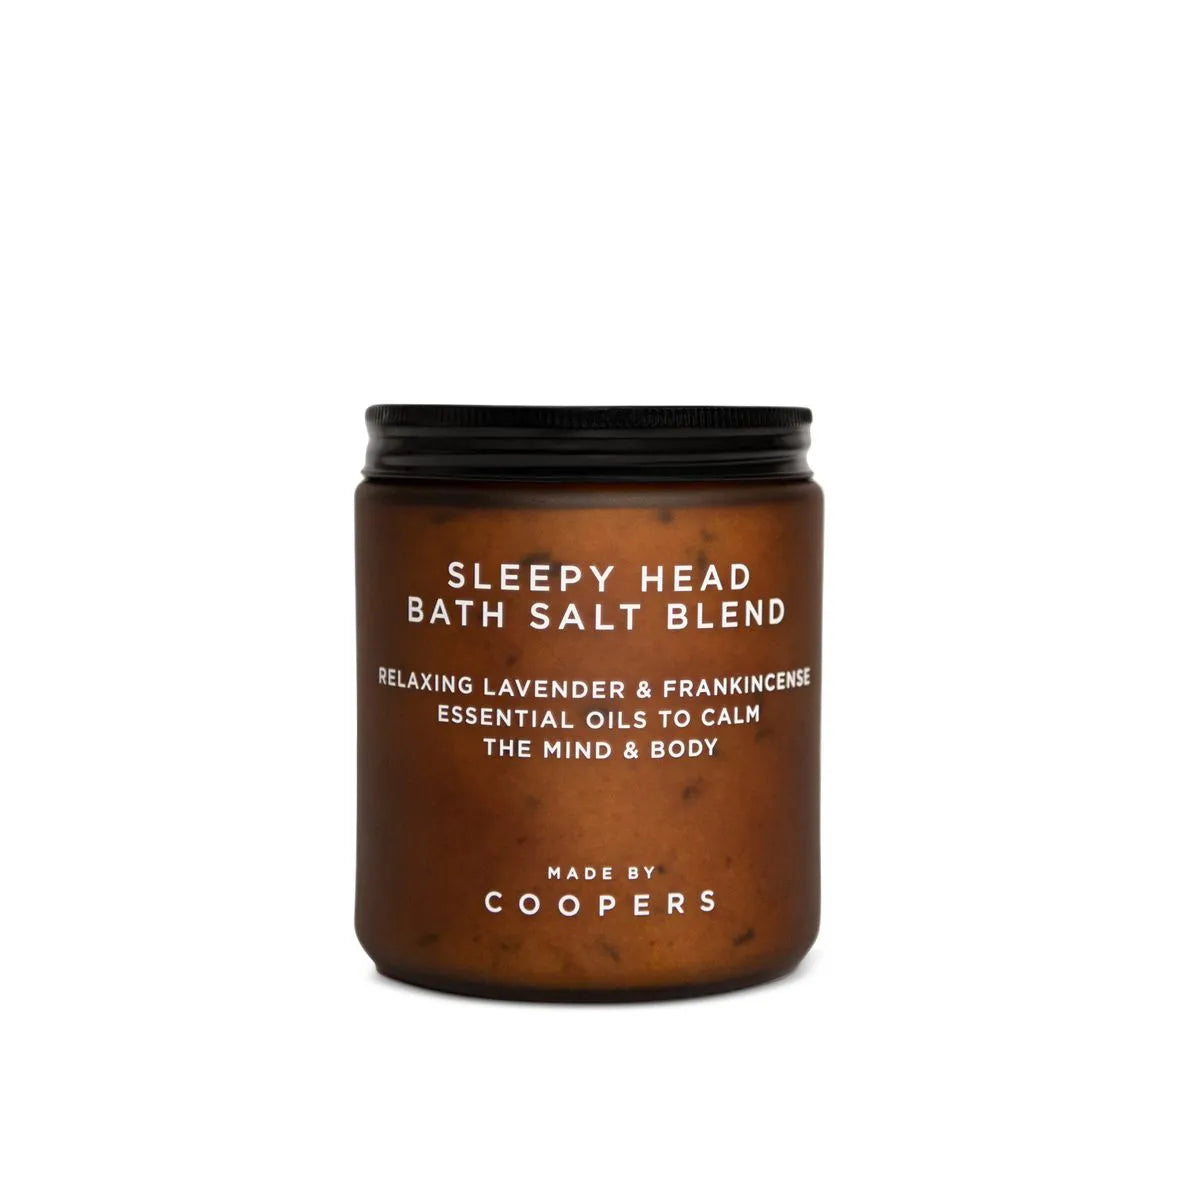 Made by Coopers - Sleepy Head Bath Salt Blend 500g